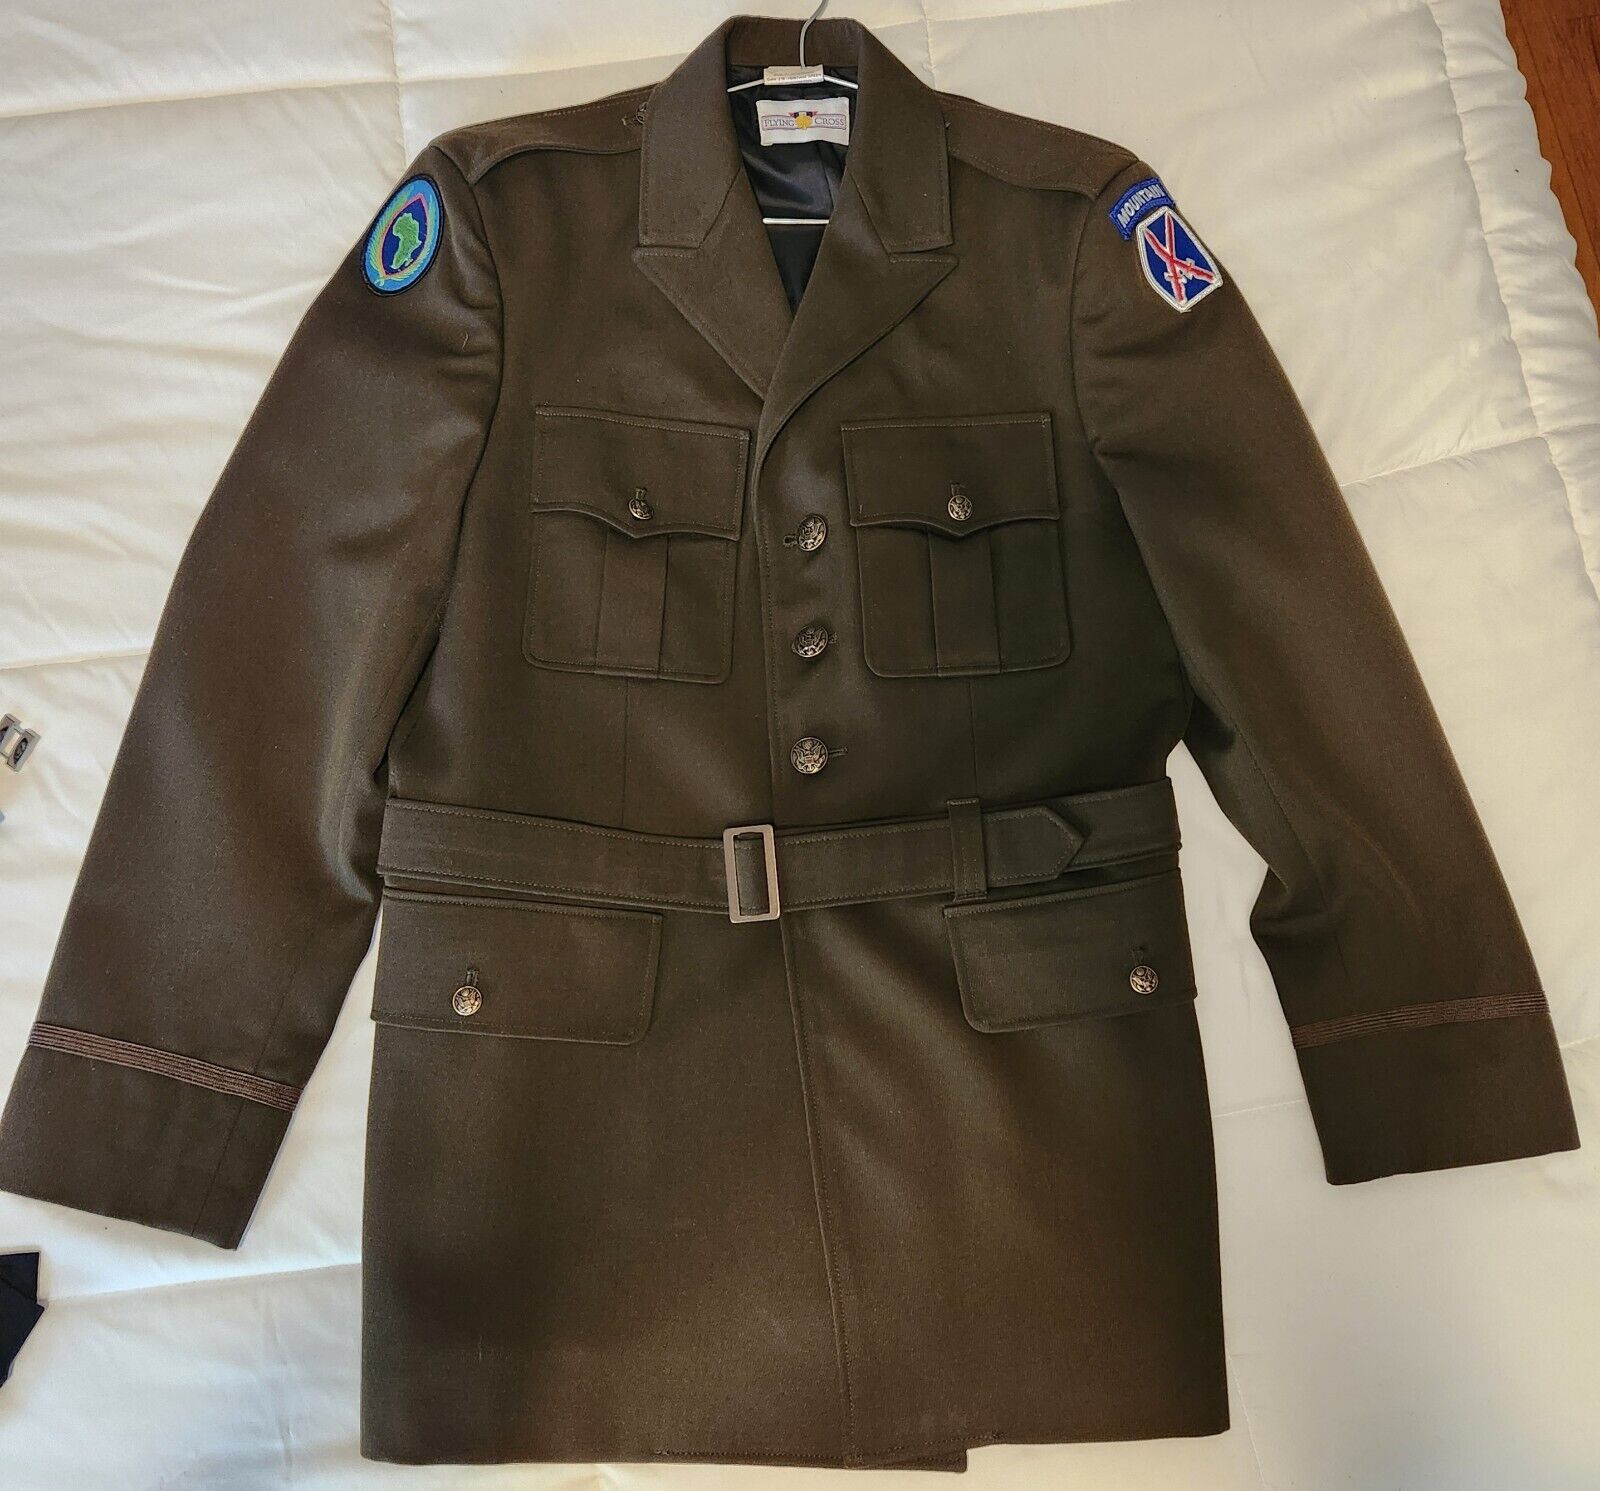 Male Army Green Service Uniform AGSU Coat Jacket 42 Regular Classic Used